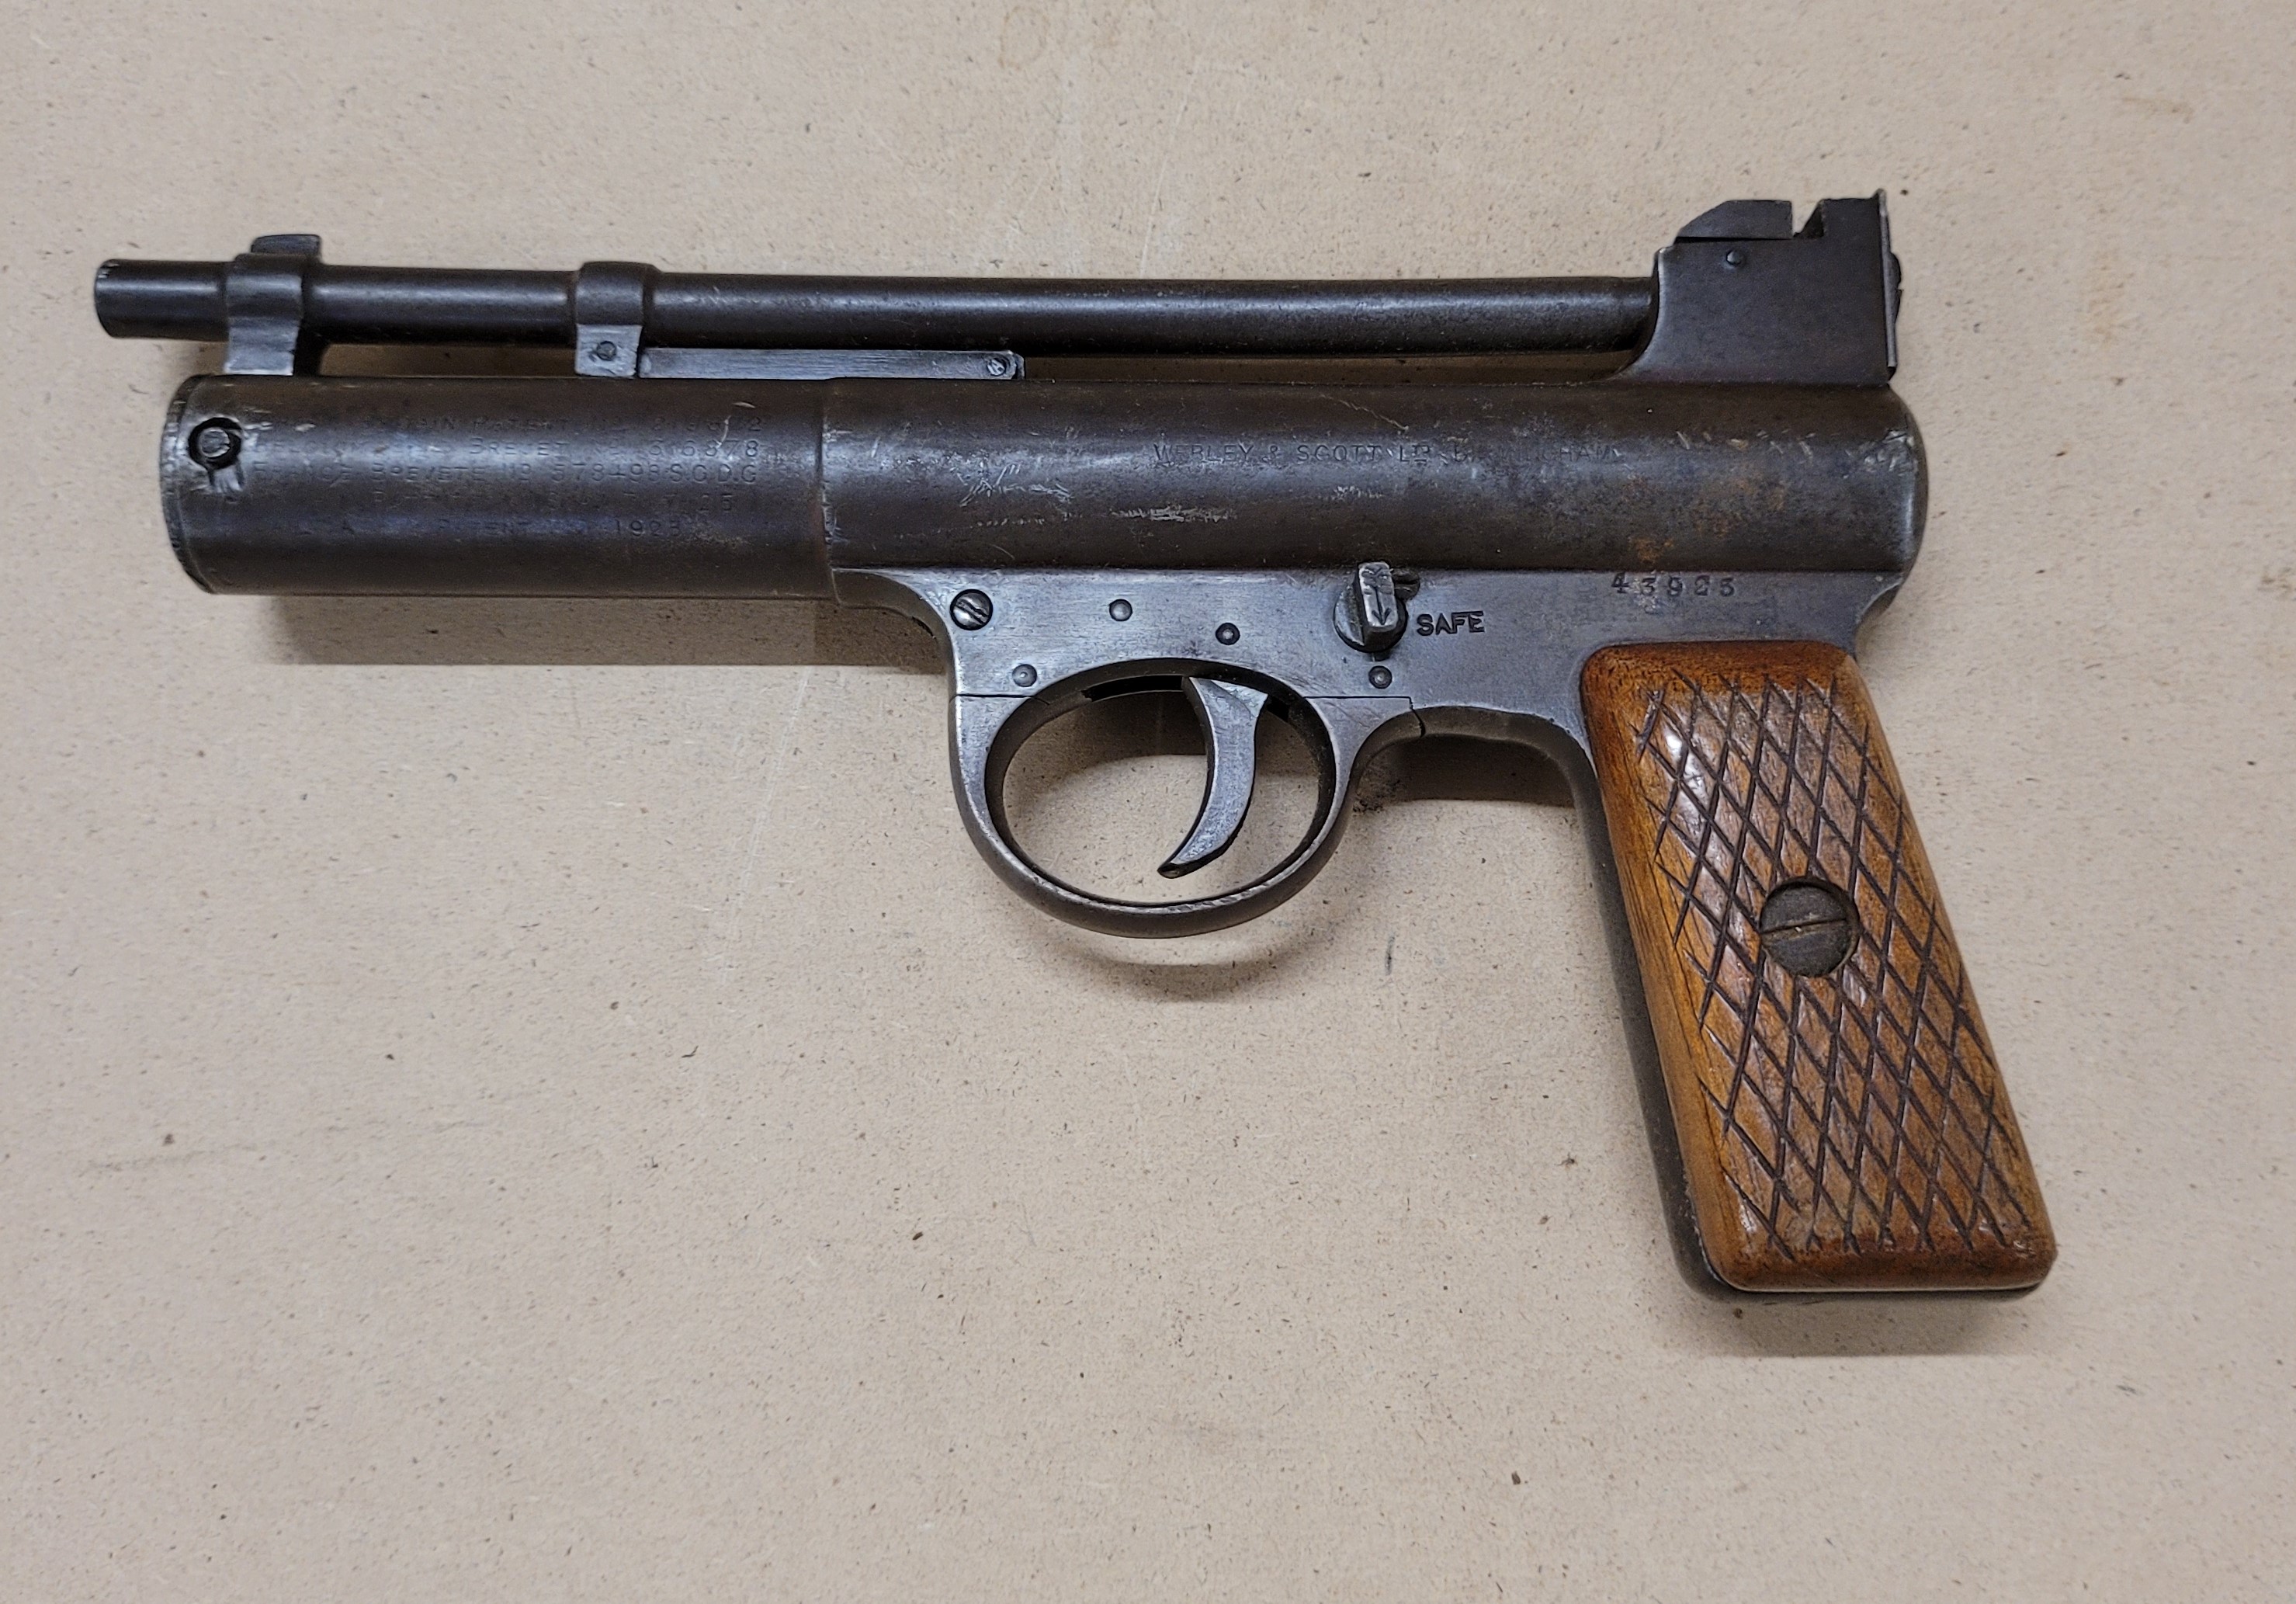 A Webley .177 cal. target shooting air pistol - Image 2 of 2